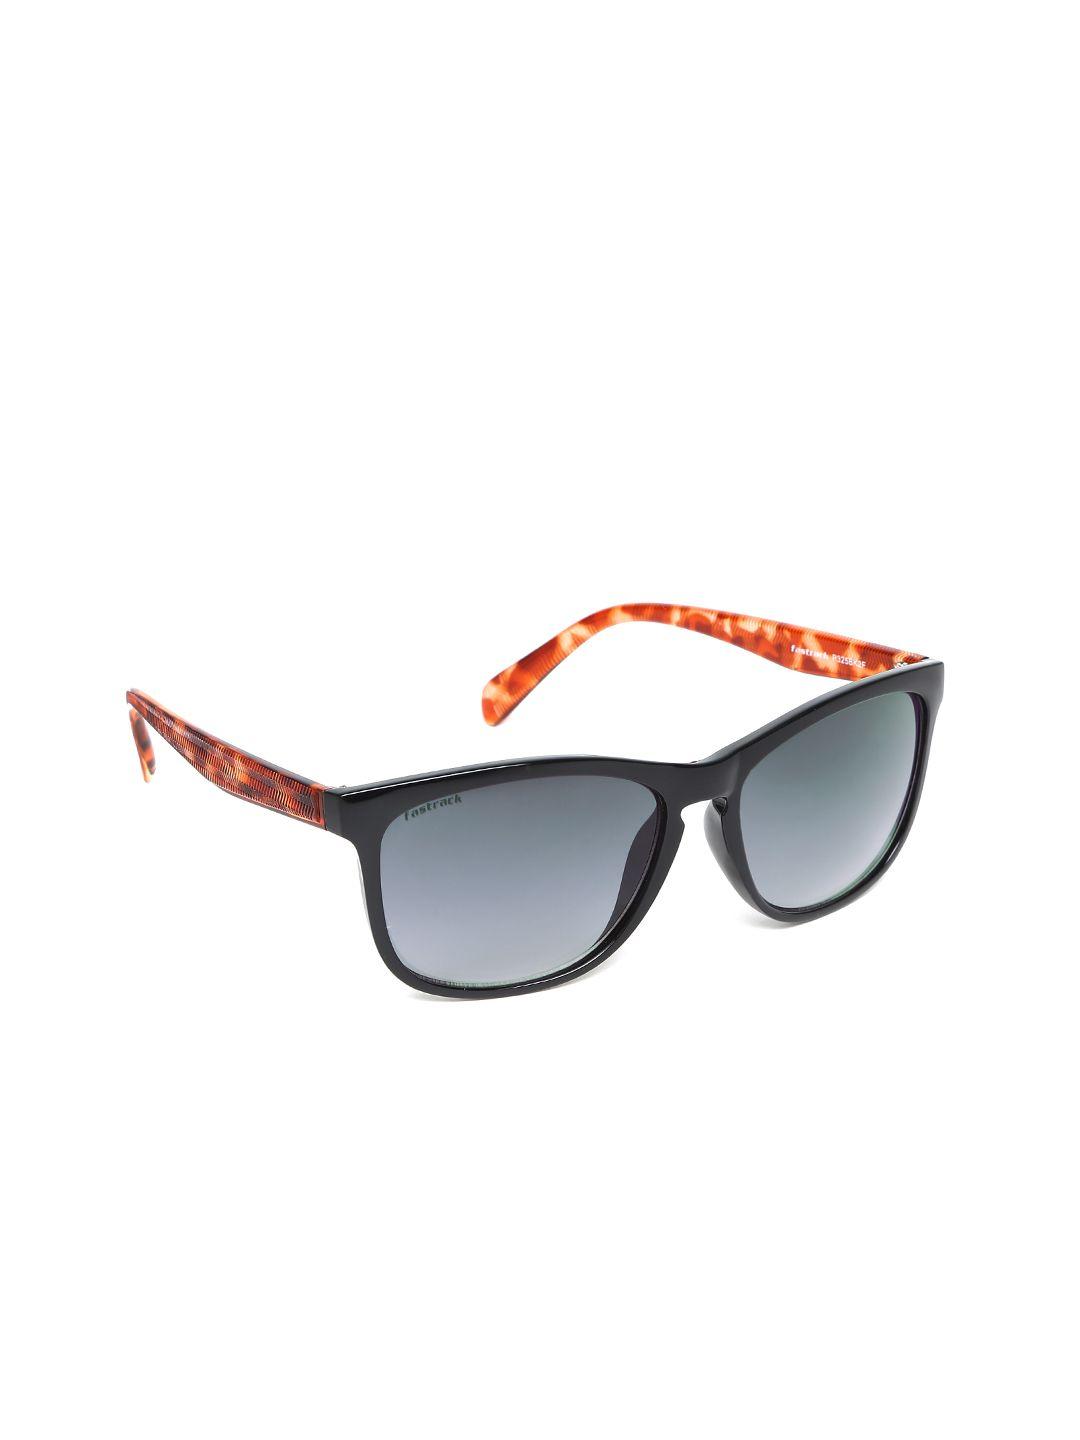 fastrack women gradient sunglasses p325bk2f